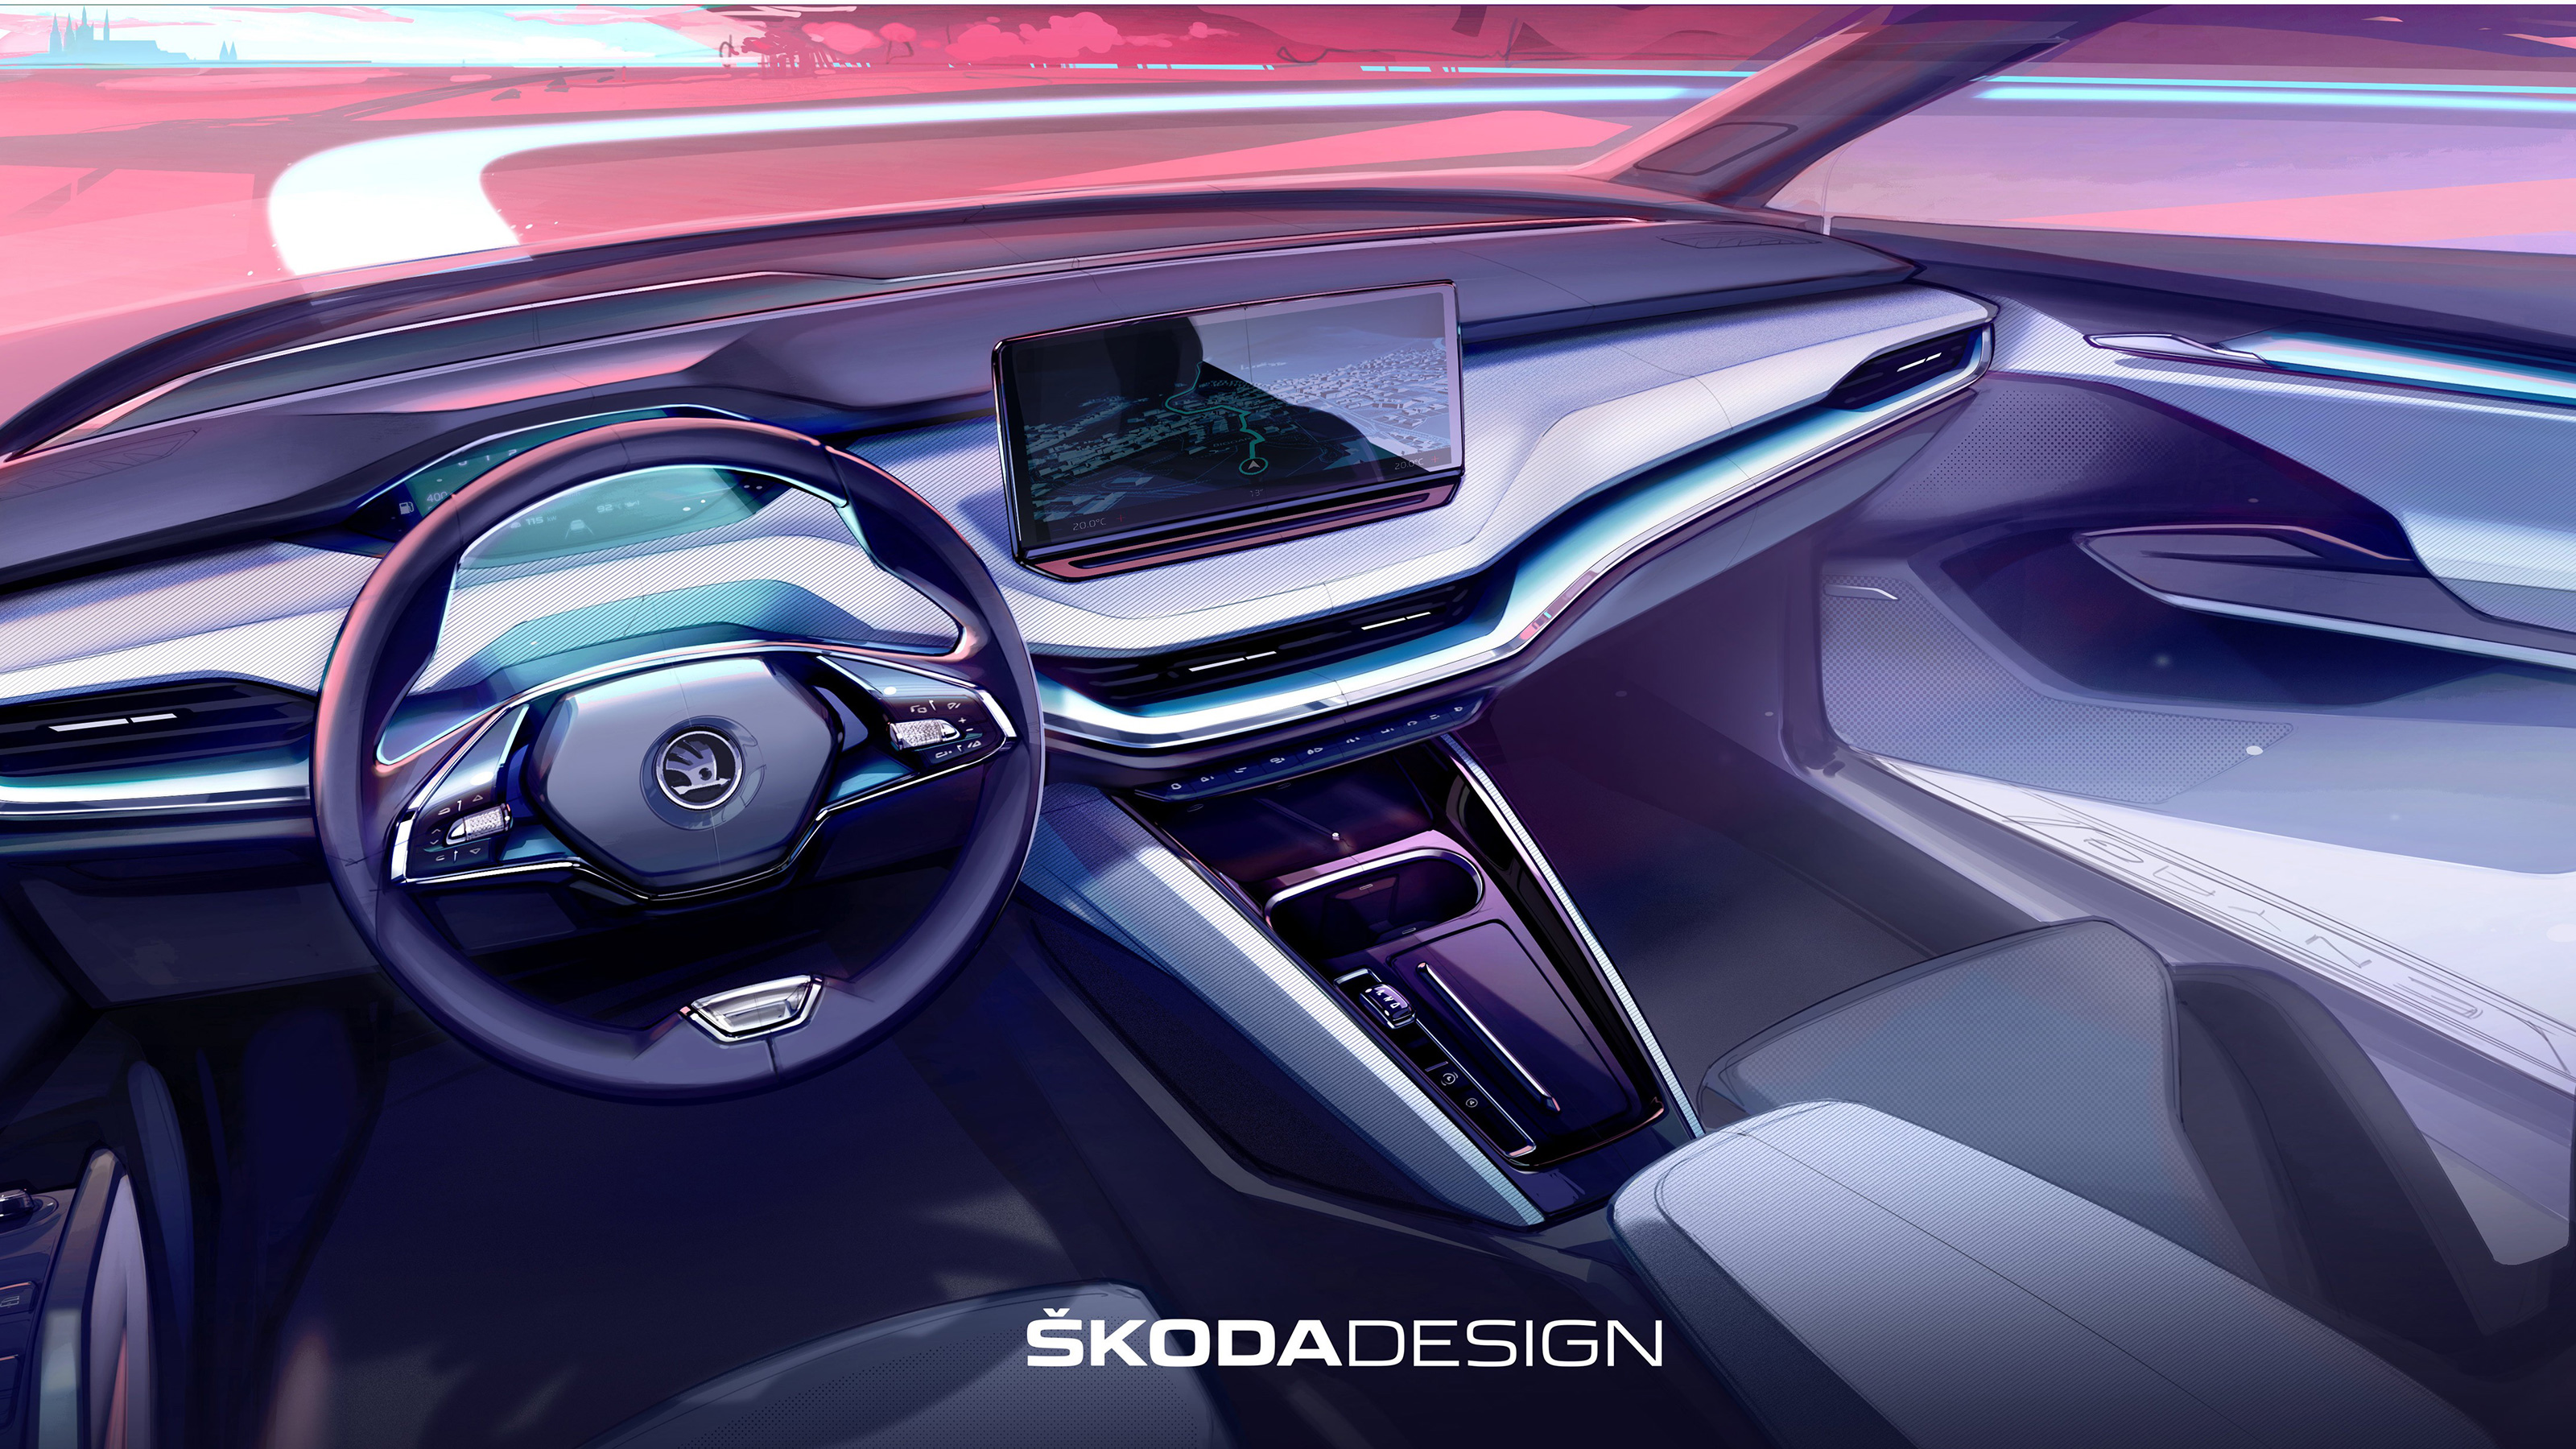 New 2021 Skoda Enyaq electric SUV: interior teased with 